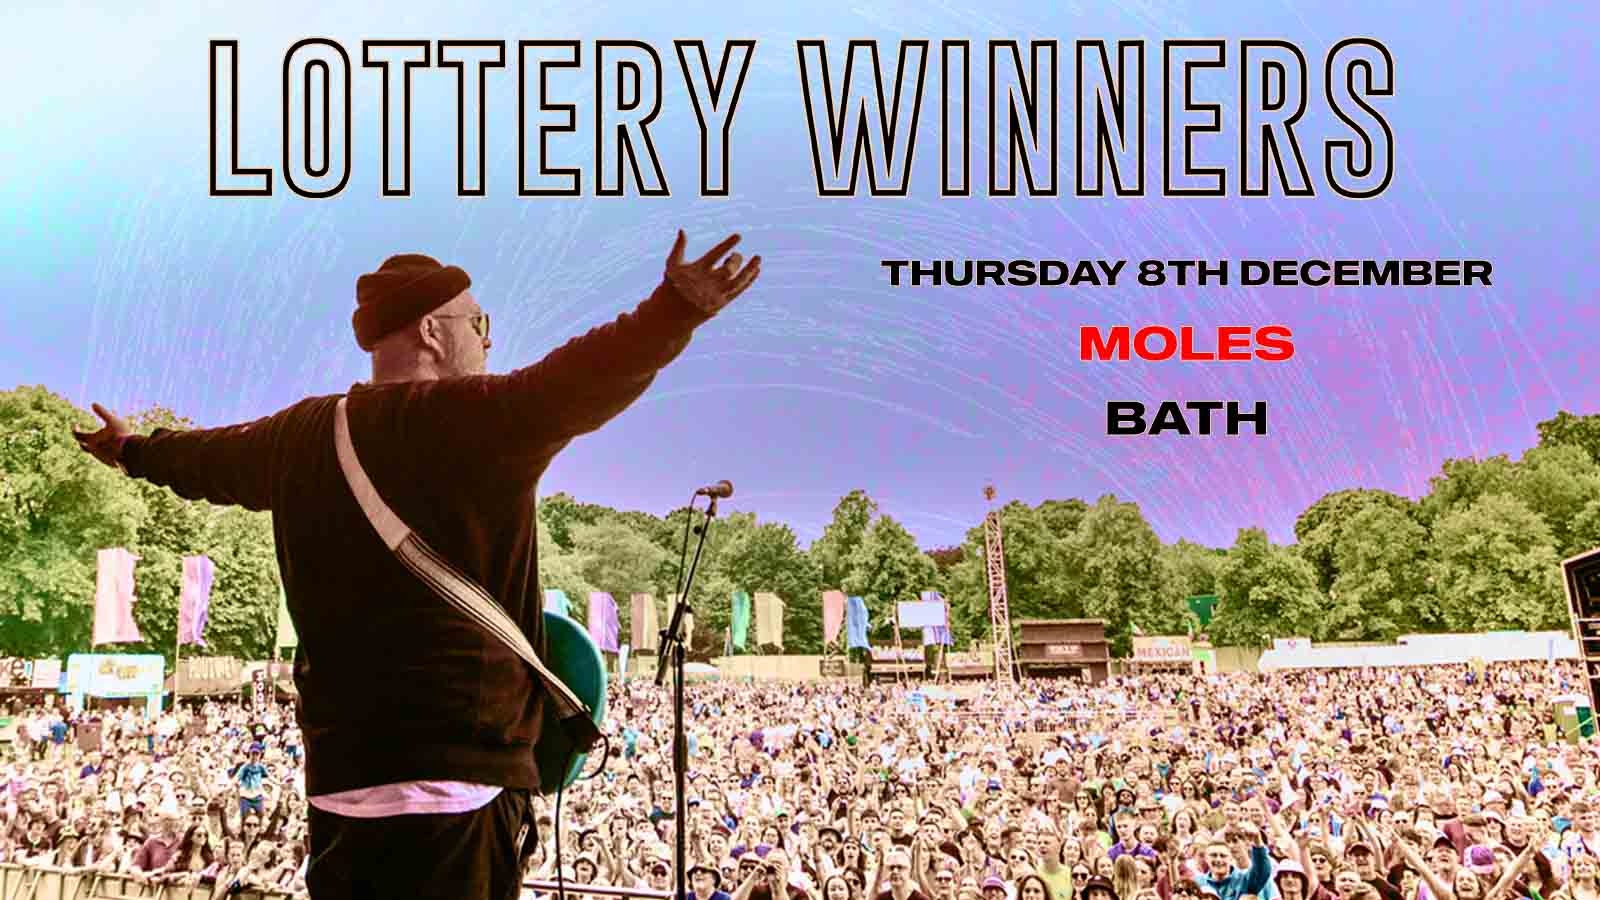 Lottery Winners at Moles, Bath